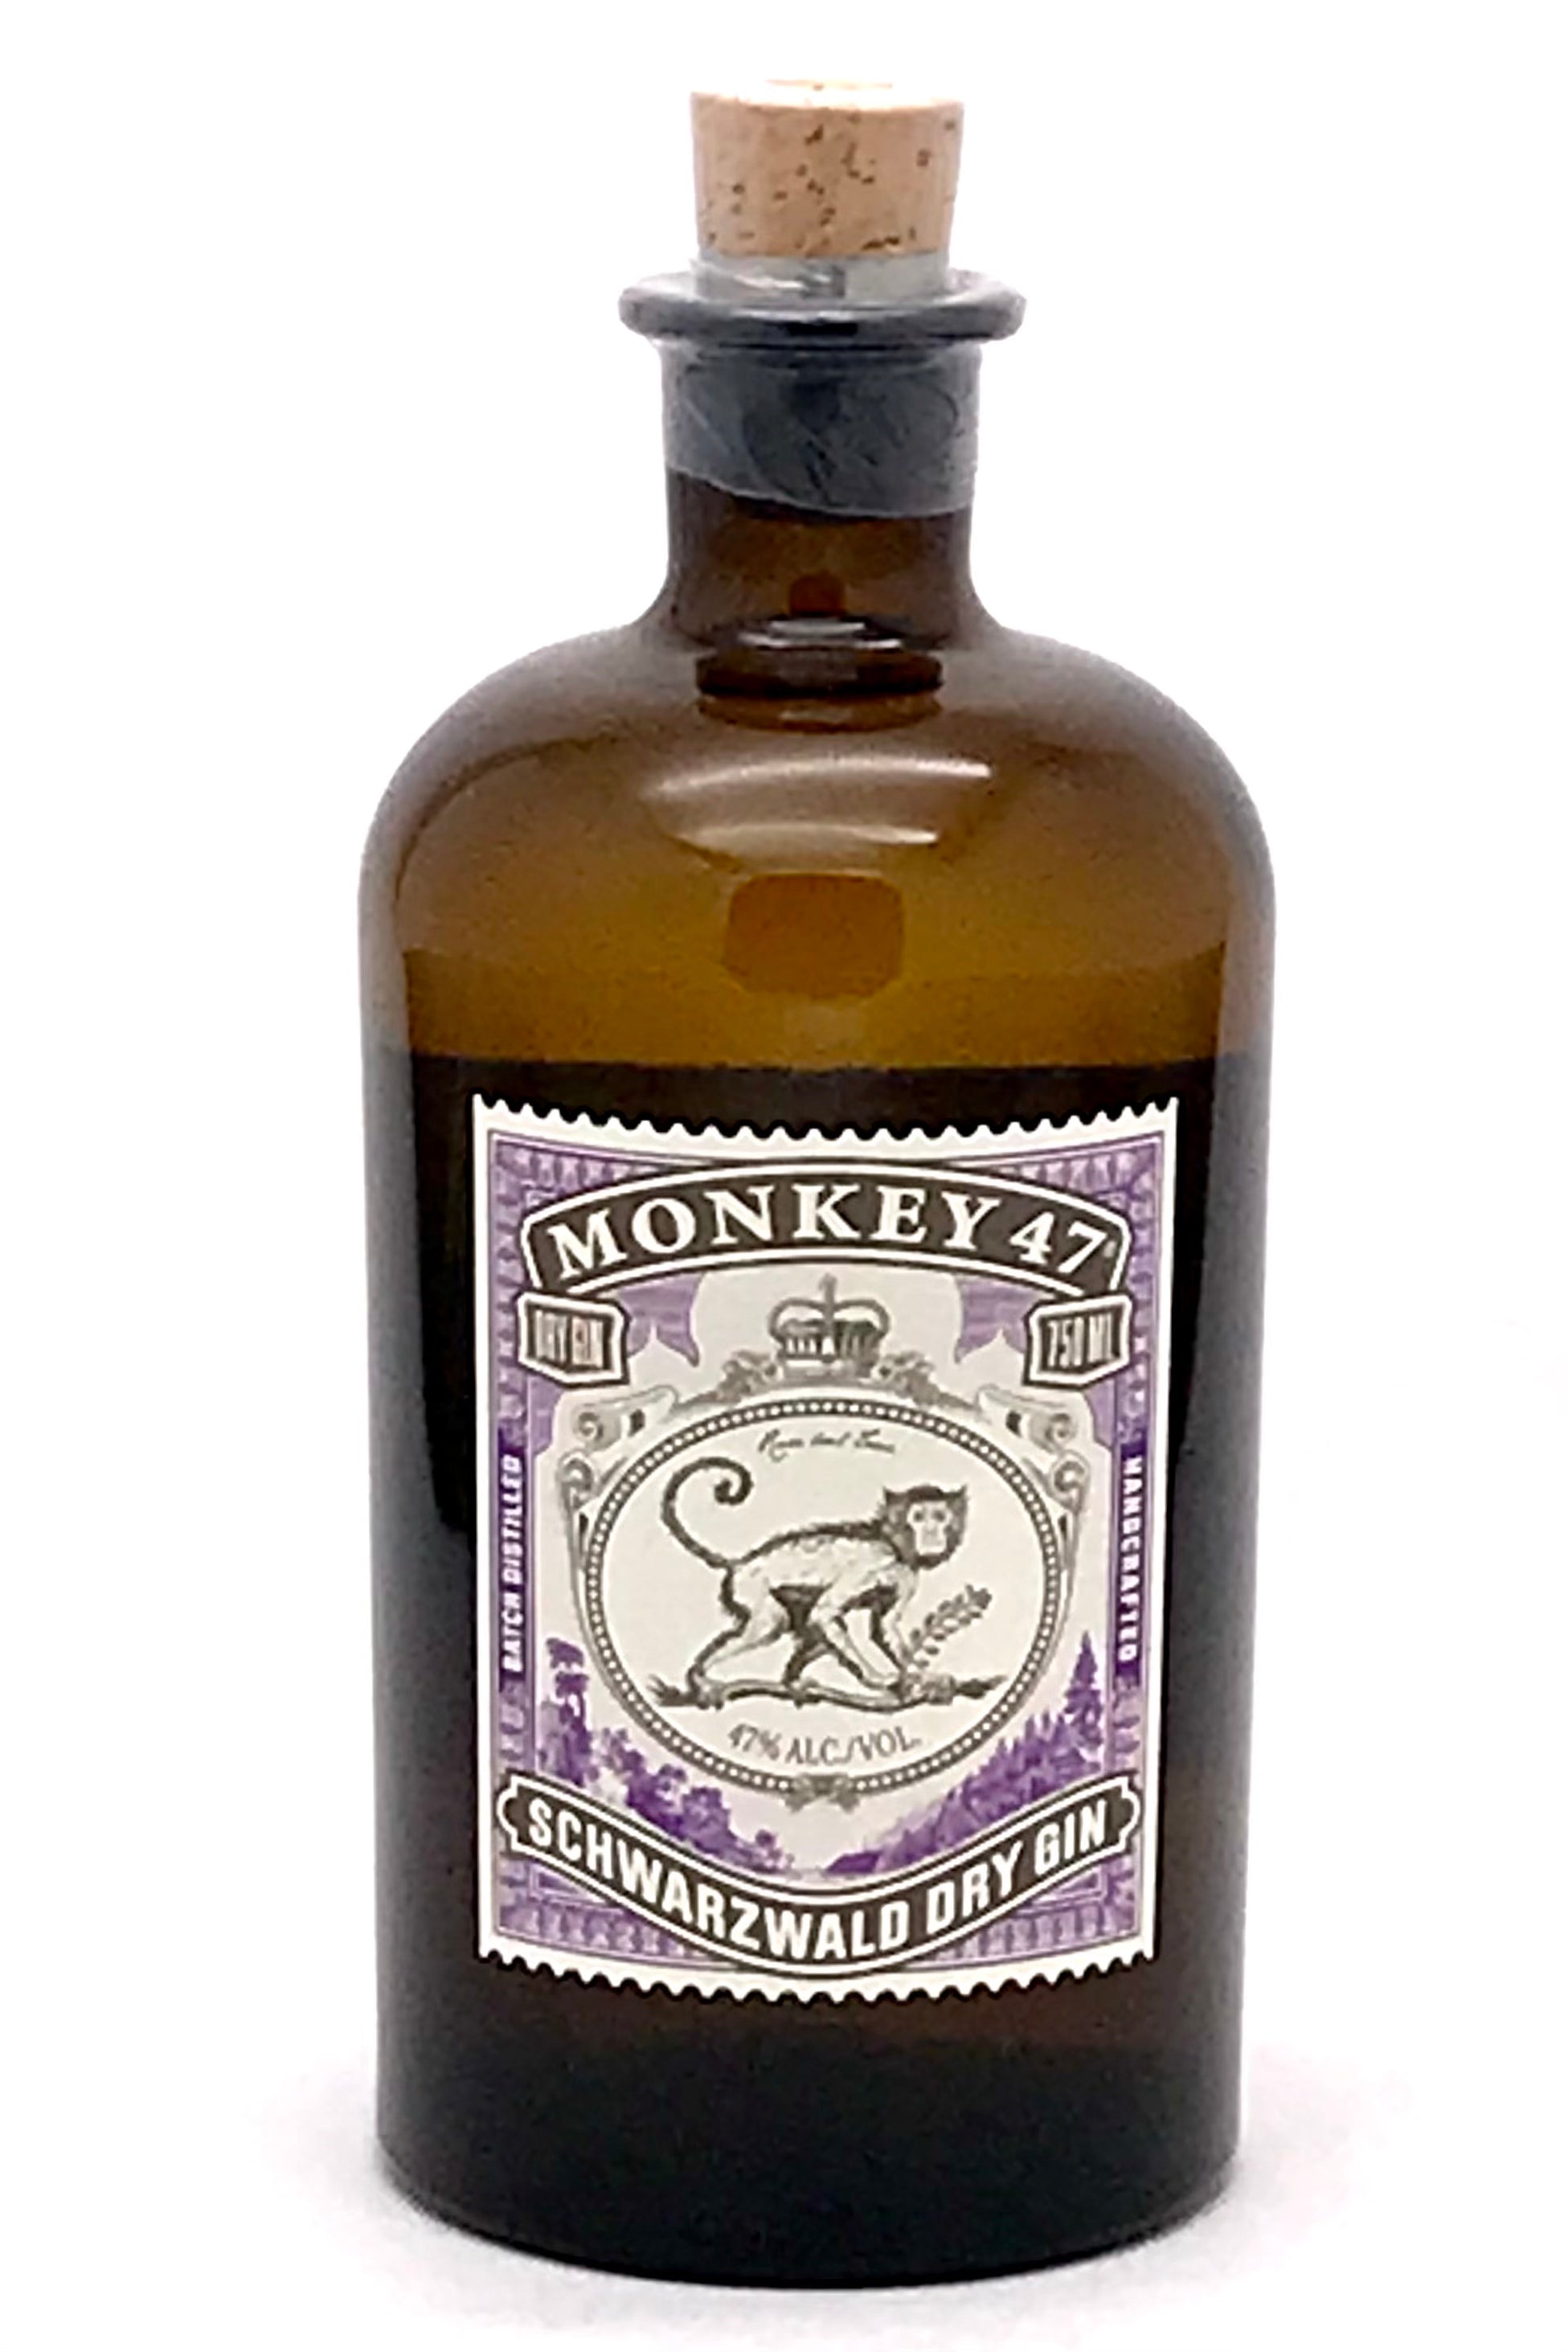 47 Buy Monkey ml 750 Online Dry Gin Schwarzwald